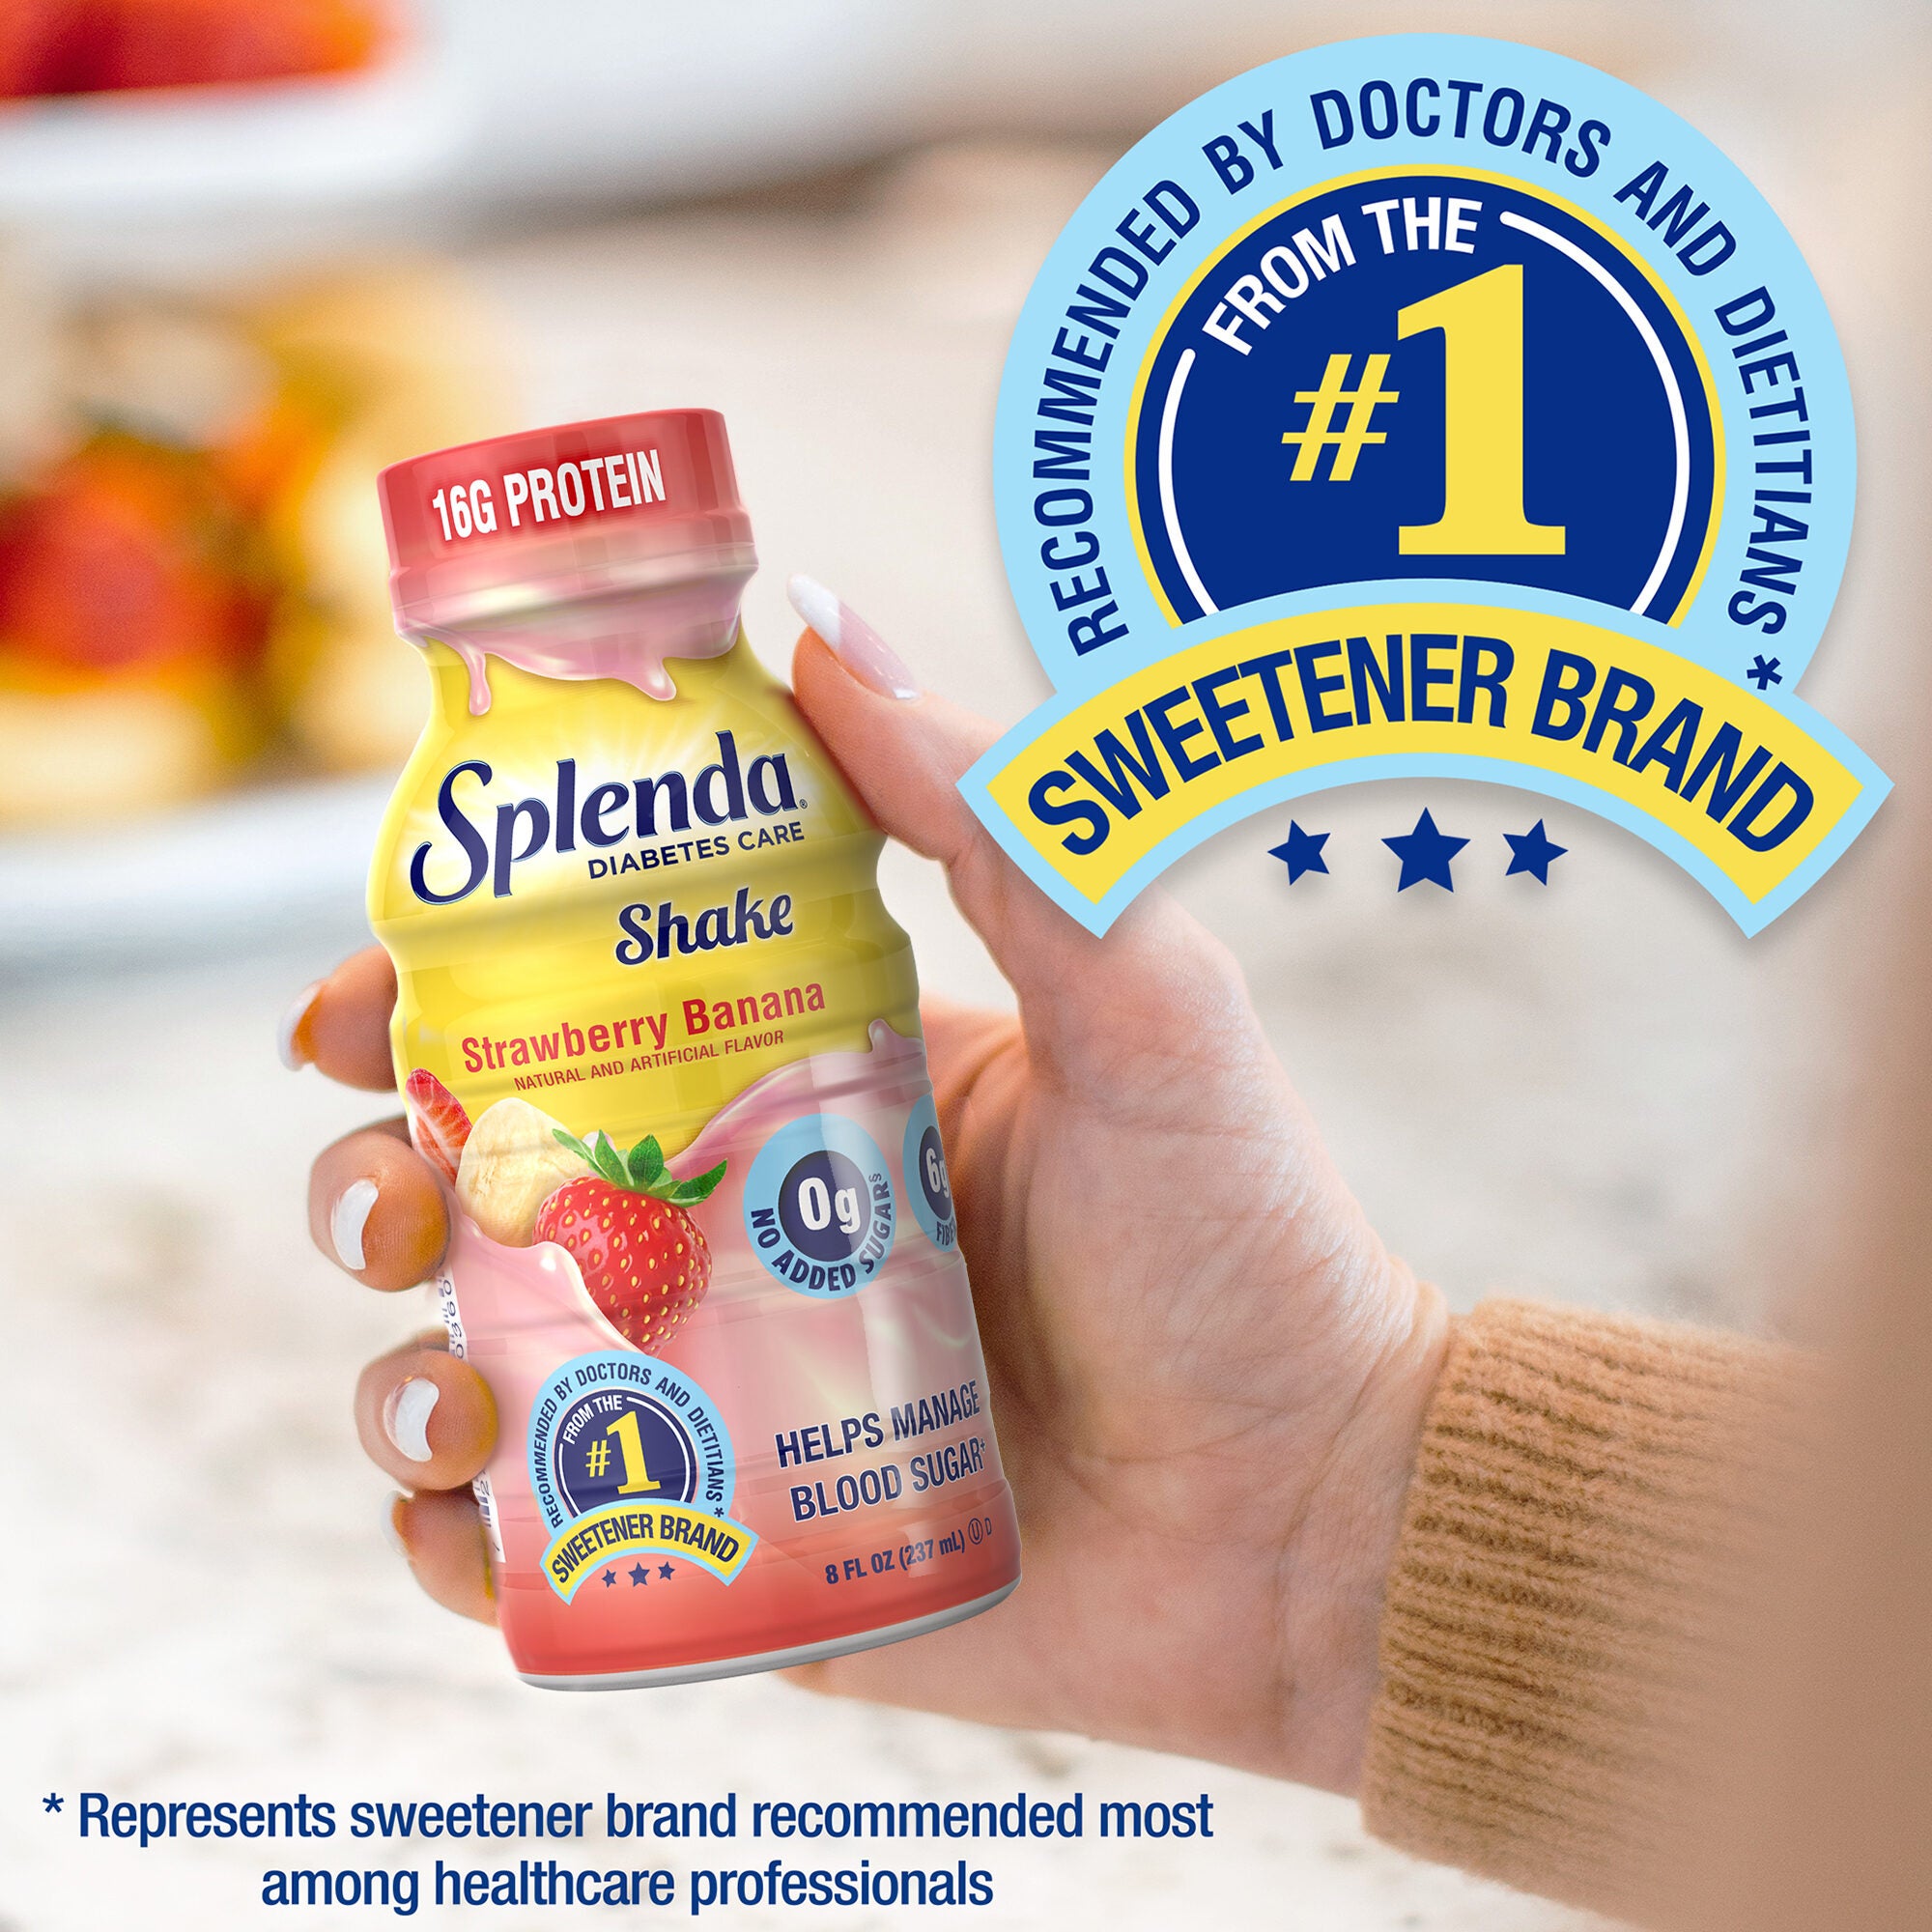 Splenda® Strawberry Banana Diabetes Care Shakes - From The #1 Sweetener Brand